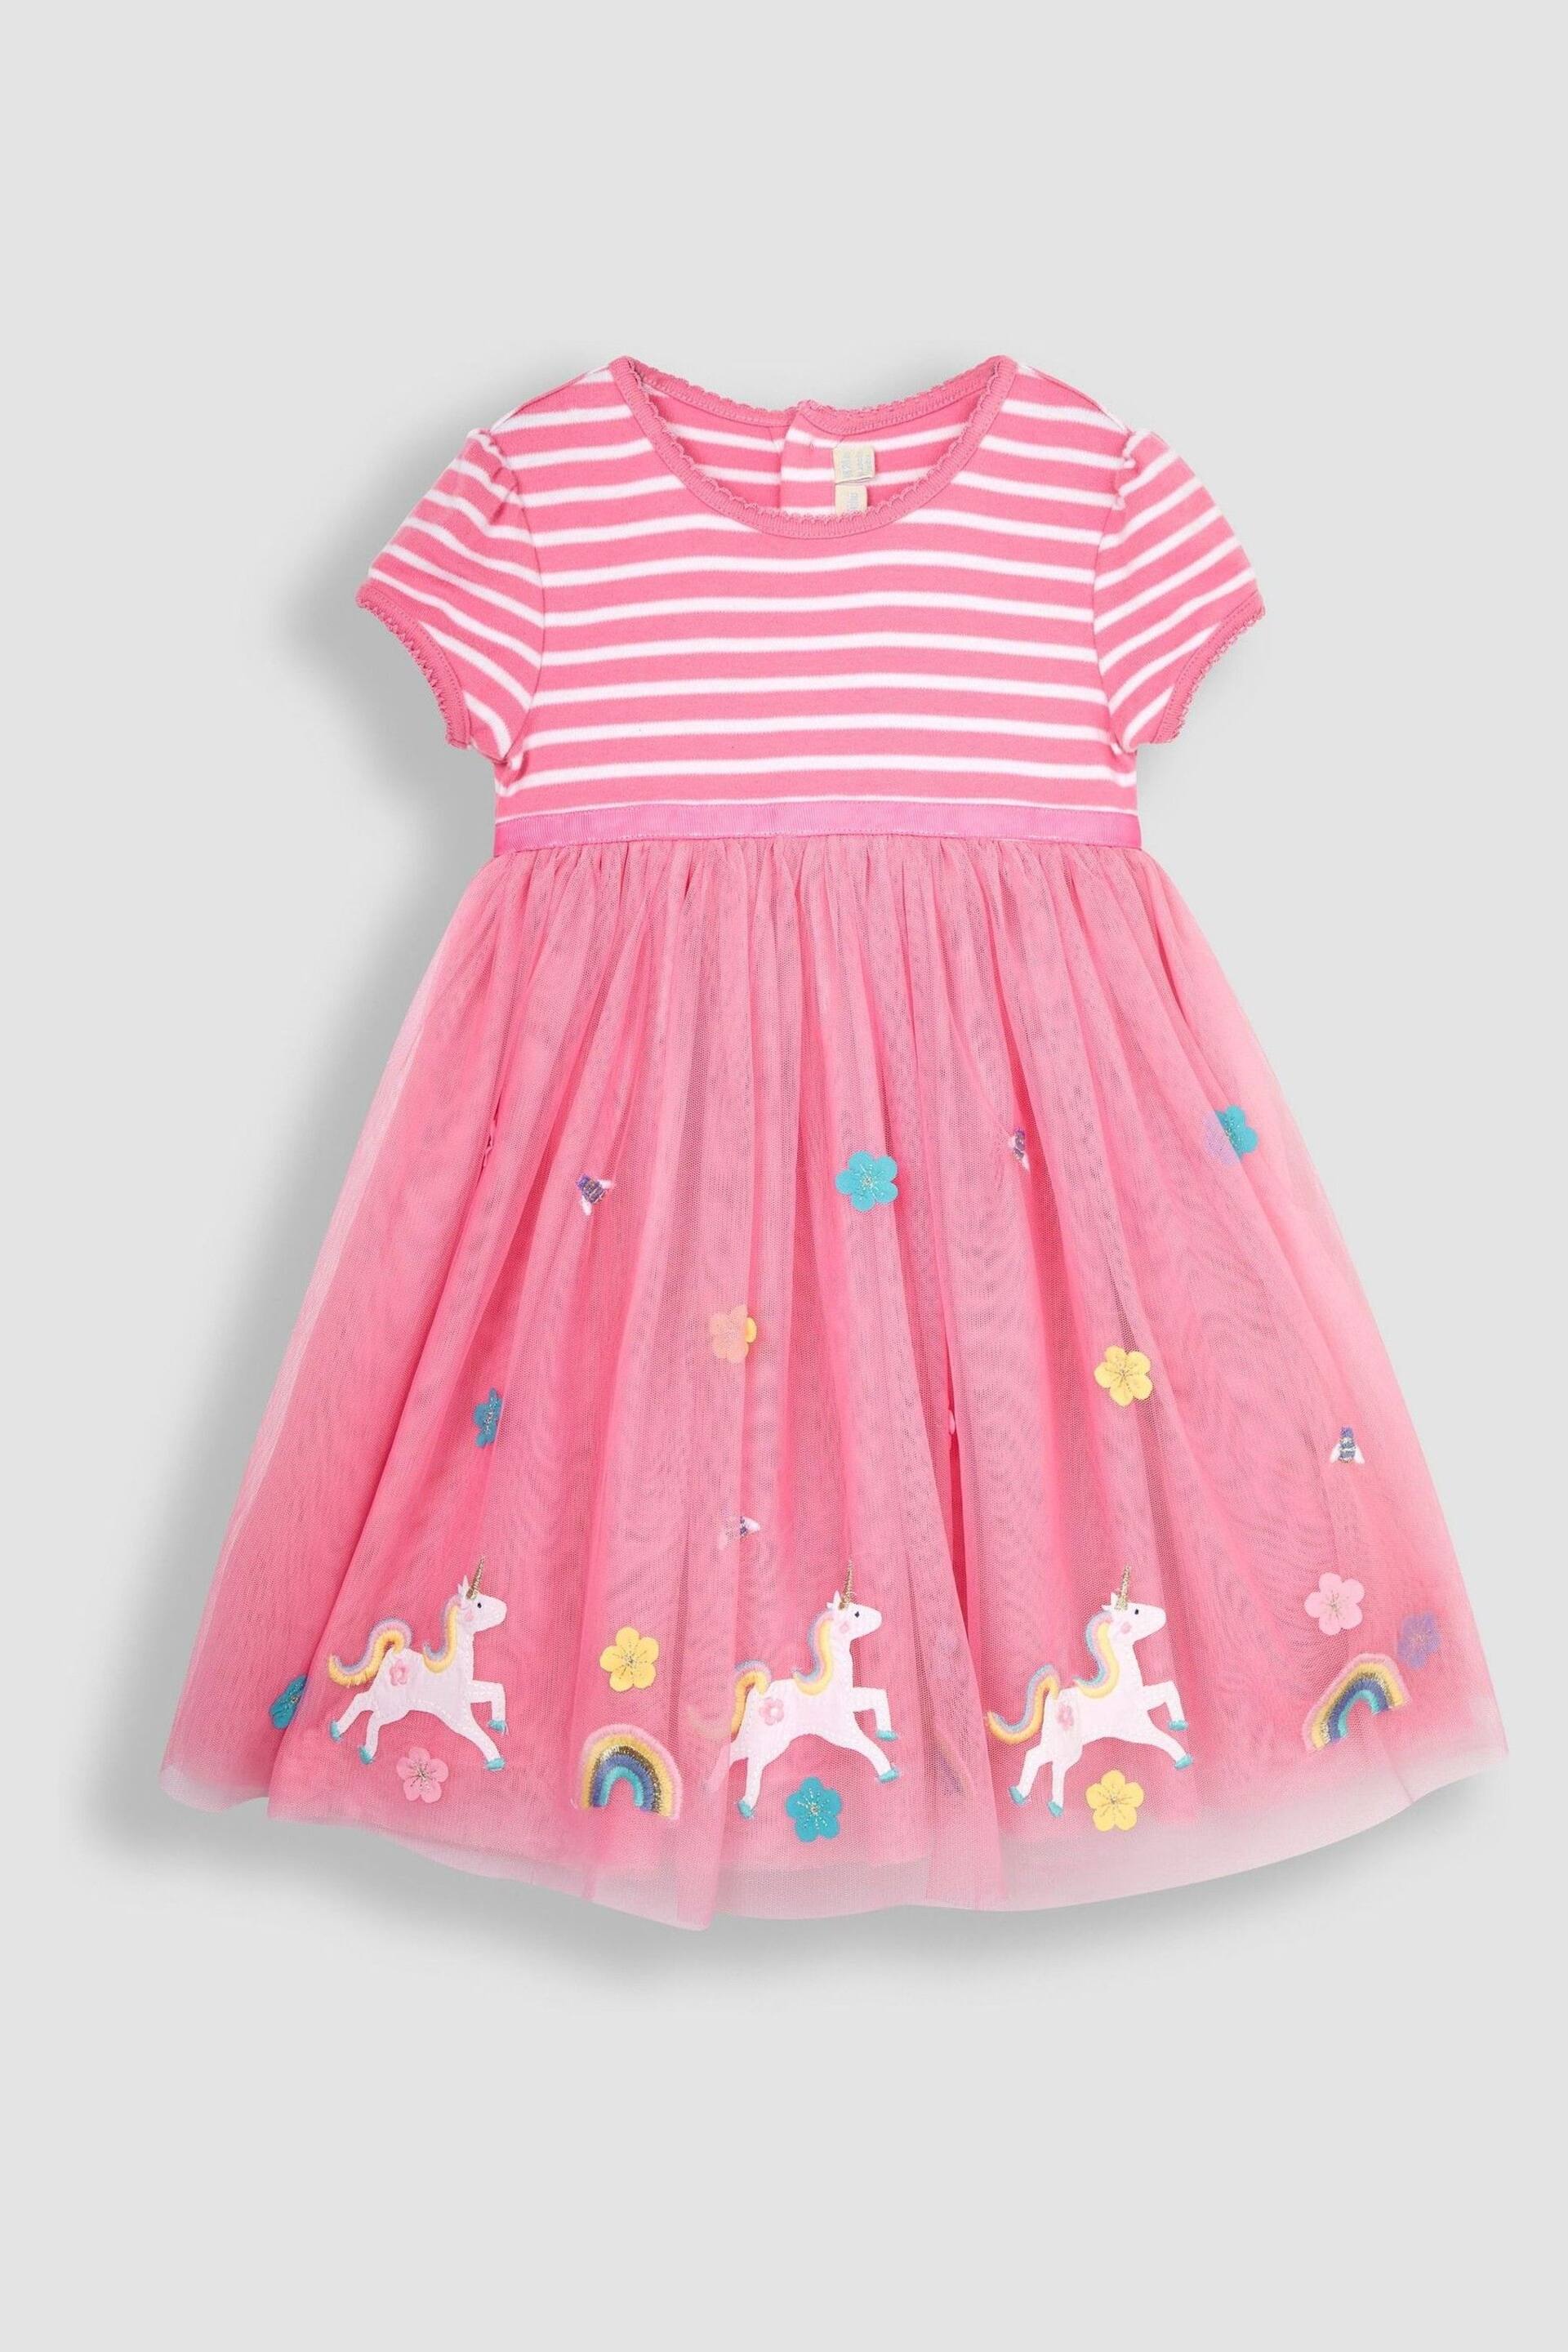 JoJo Maman Bébé Pink Unicorn Tulle Party Dress - Image 4 of 6